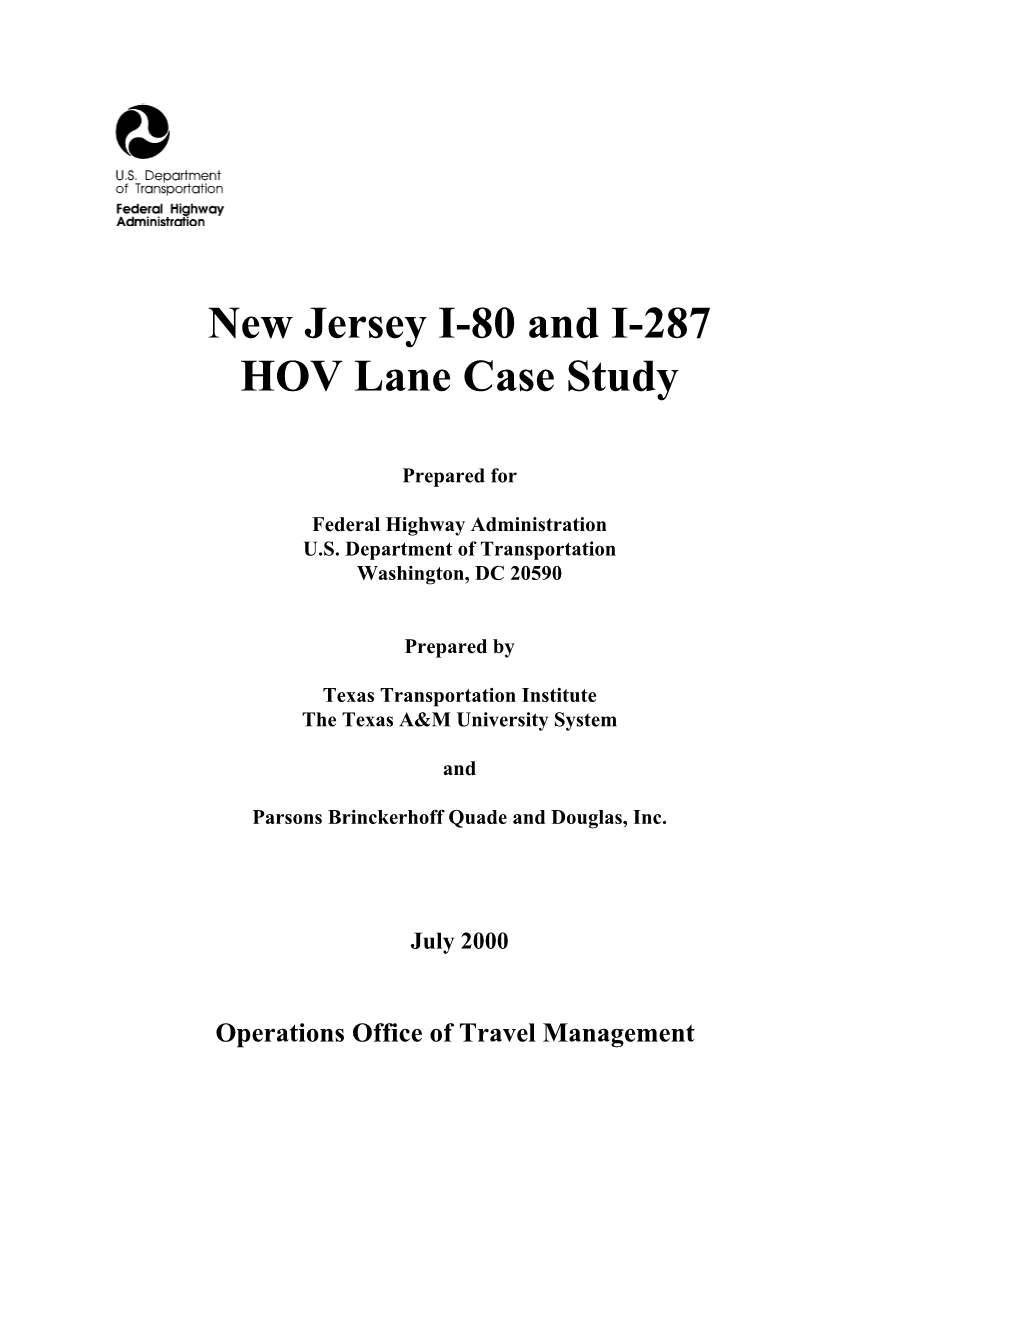 New Jersey I-80 and I-287 HOV Lane Case Study